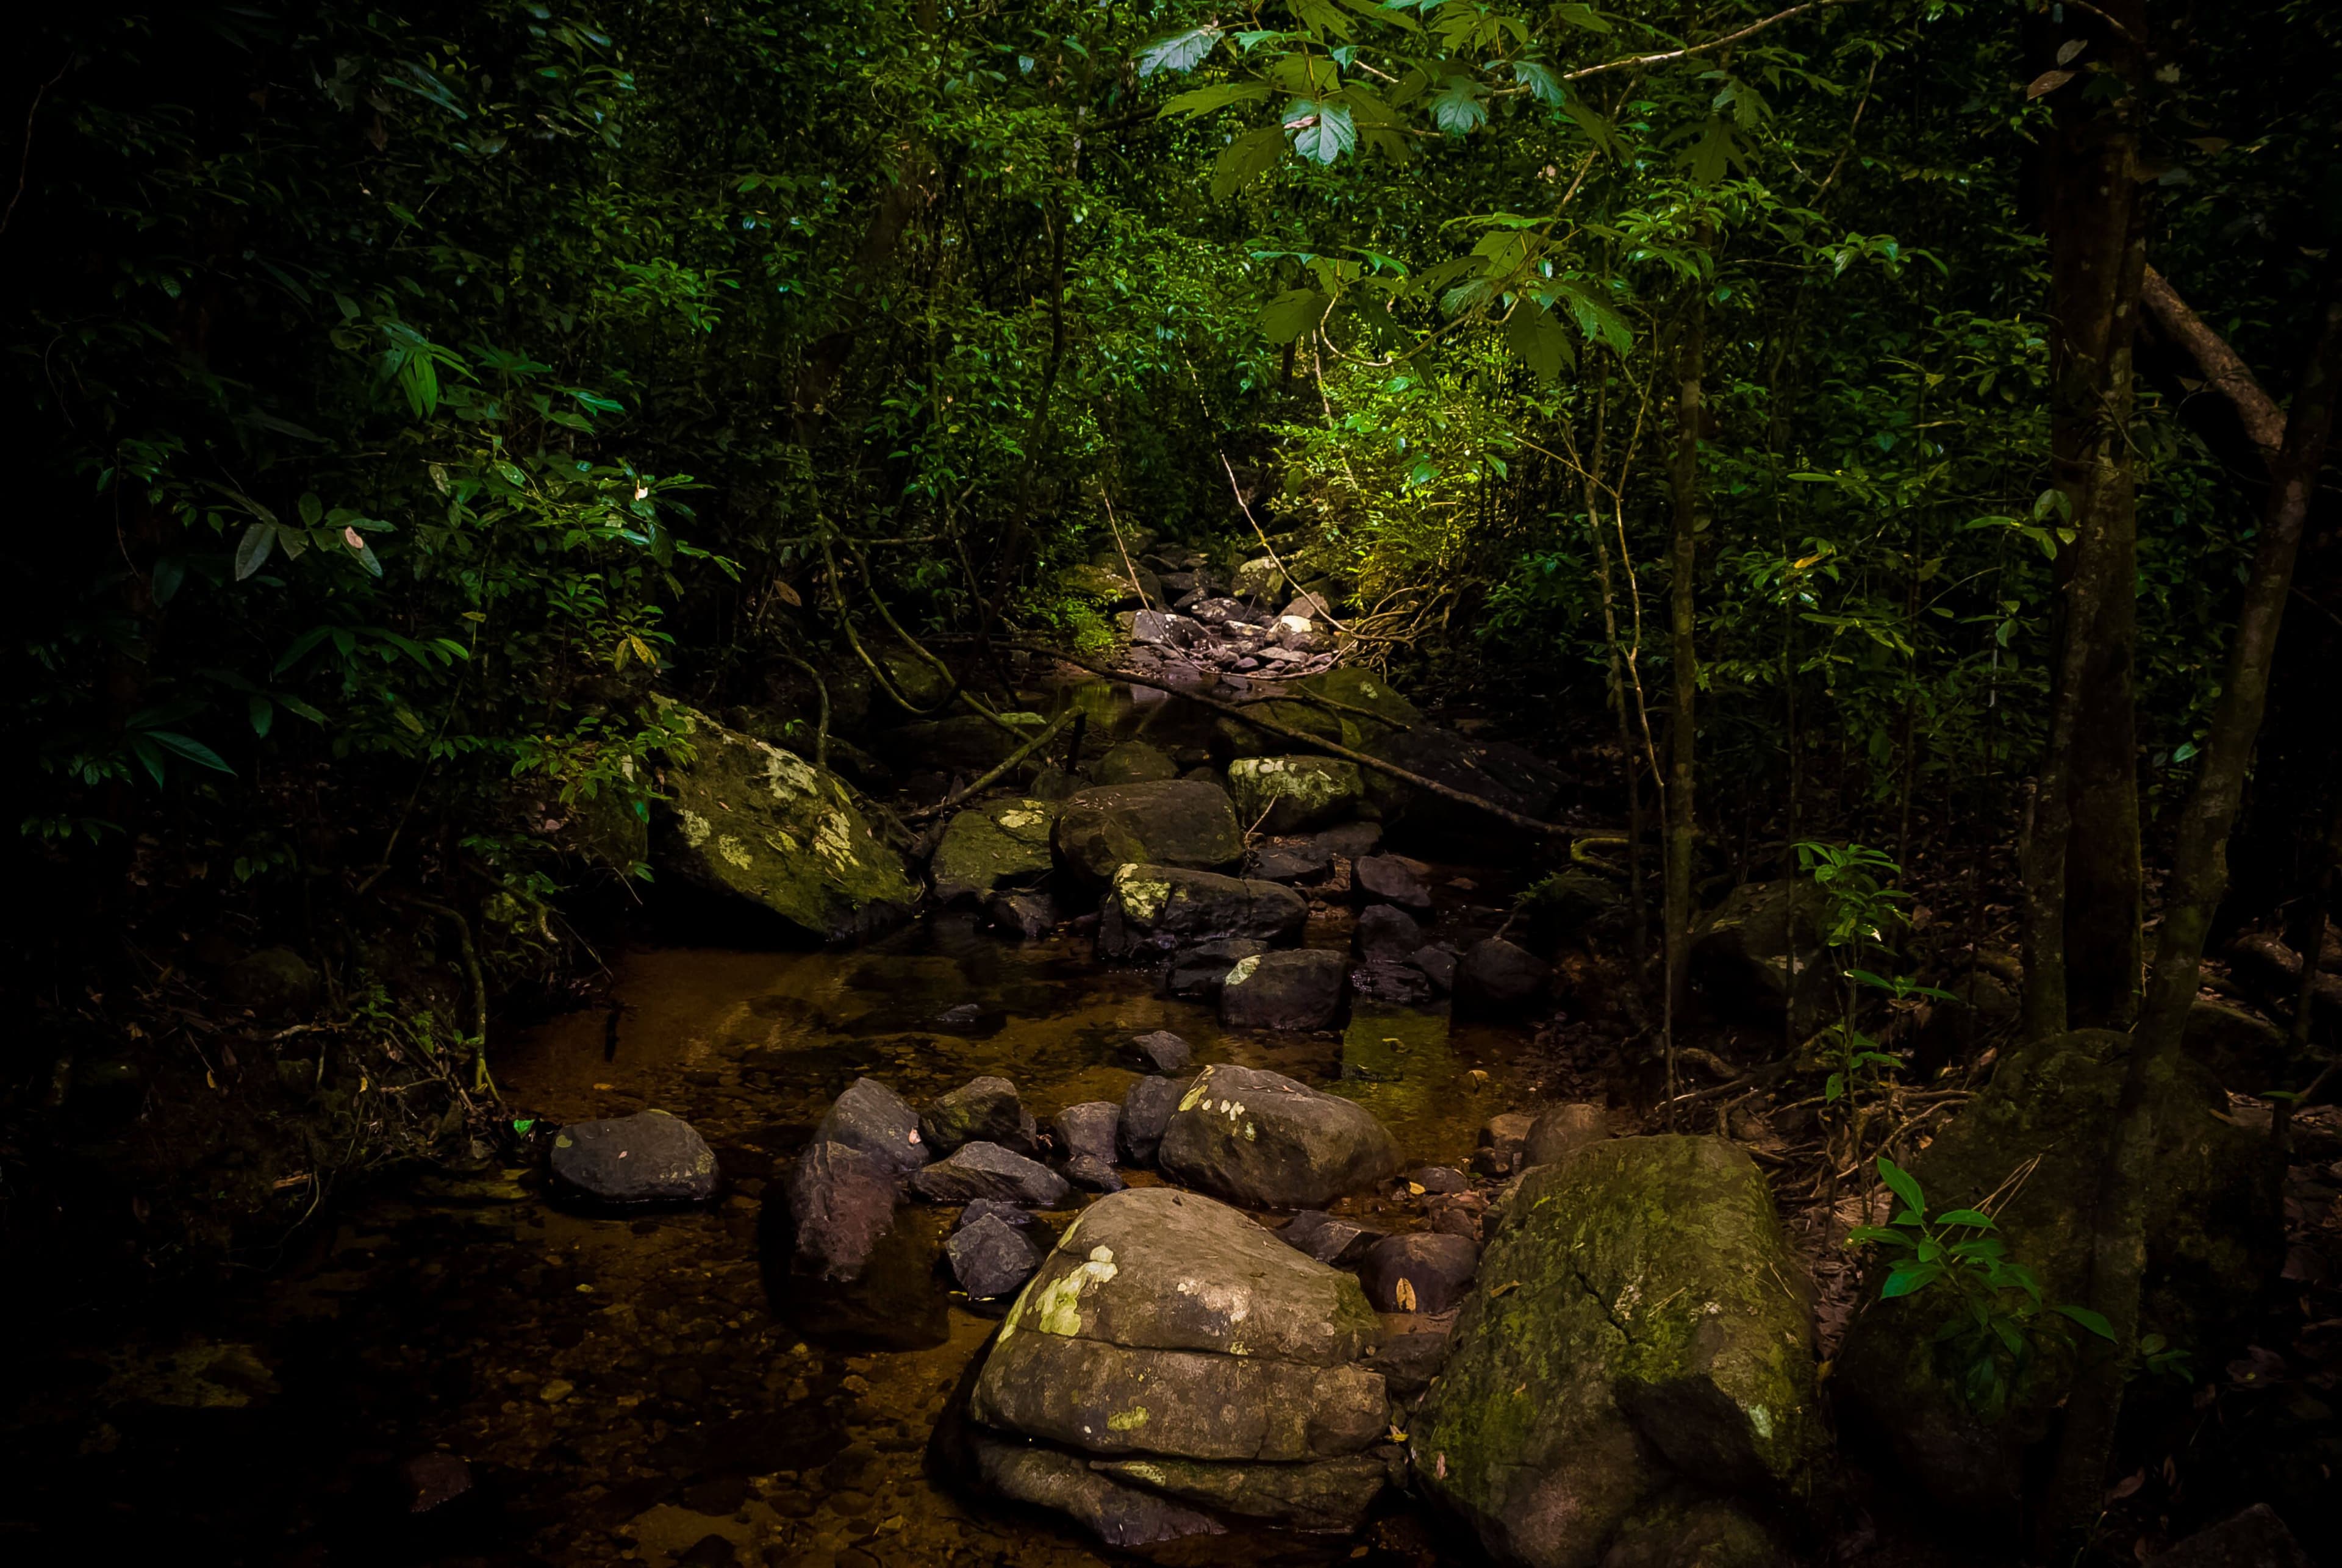 A picturesque scene in Galle Kanneliya forest, Sri Lanka 